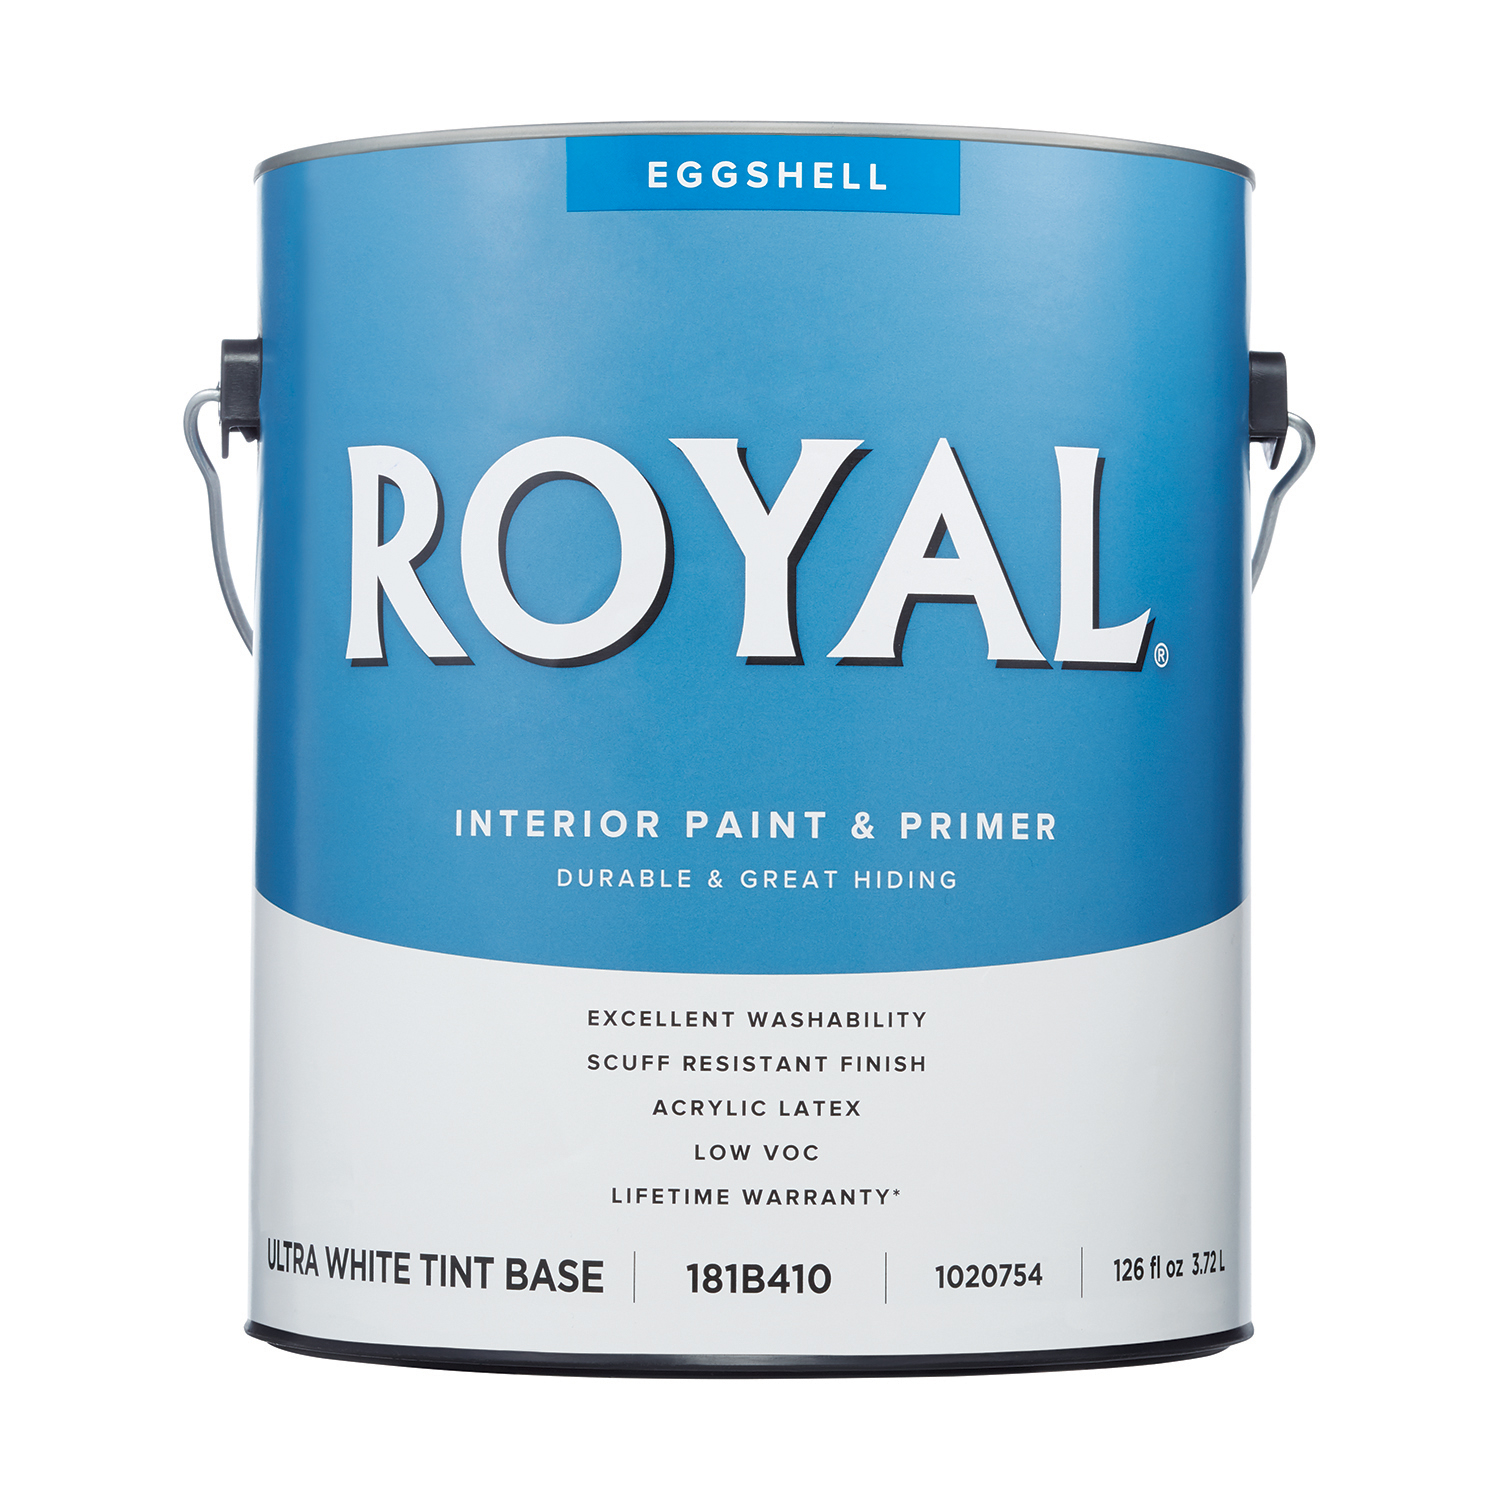 Royal Eggshell Tint Base Ultra White Base Paint Interior 1 gal